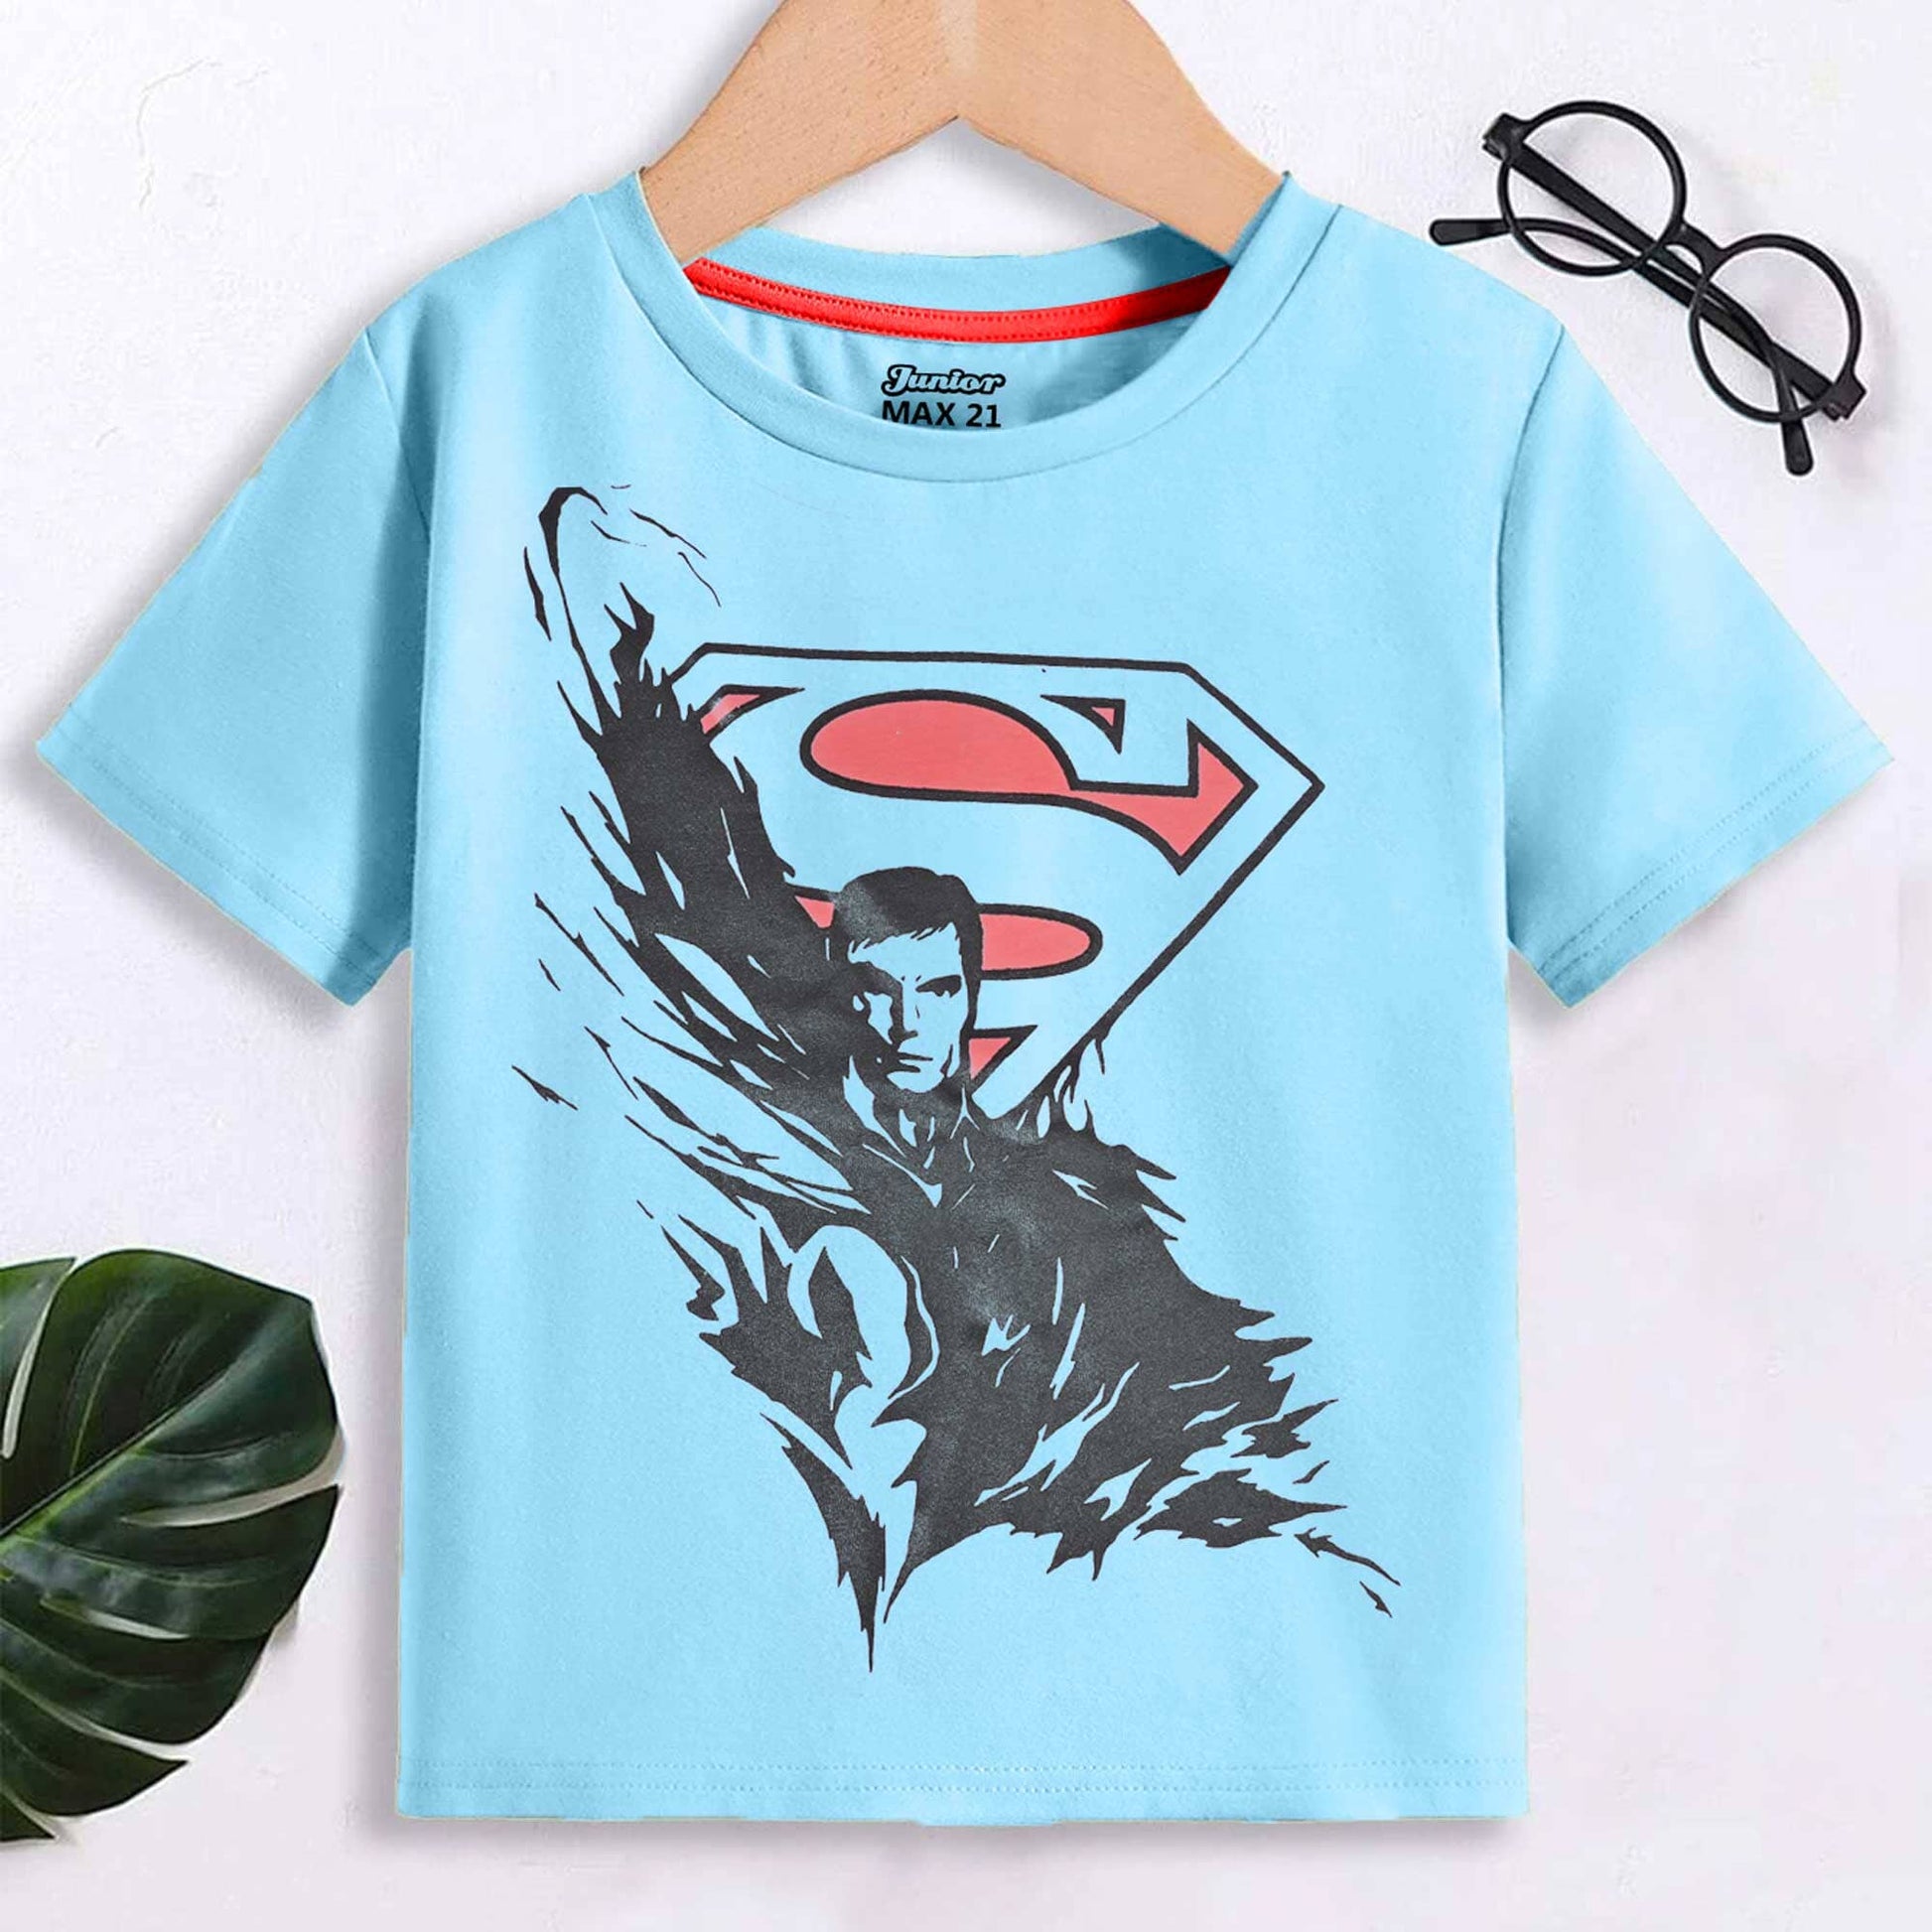 Junior Max 21 Kid's Superman Printed Tee Shirt Boy's Tee Shirt SZK Sky 3-6 Months 